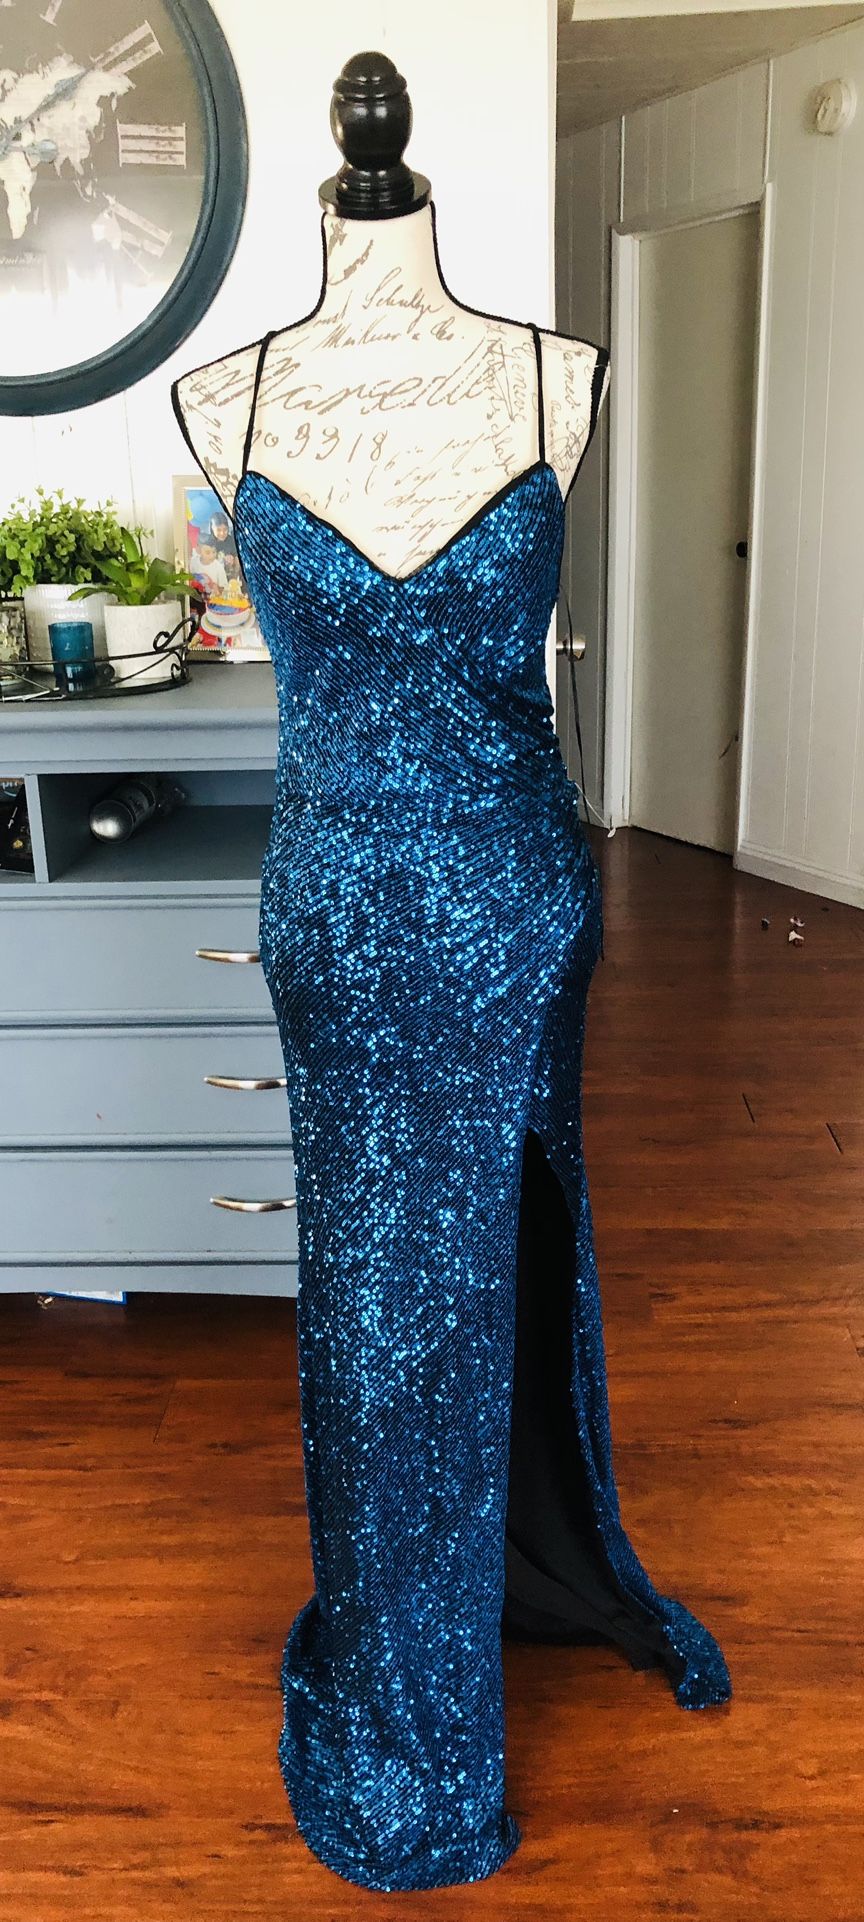 Sequined Royal blue dress 